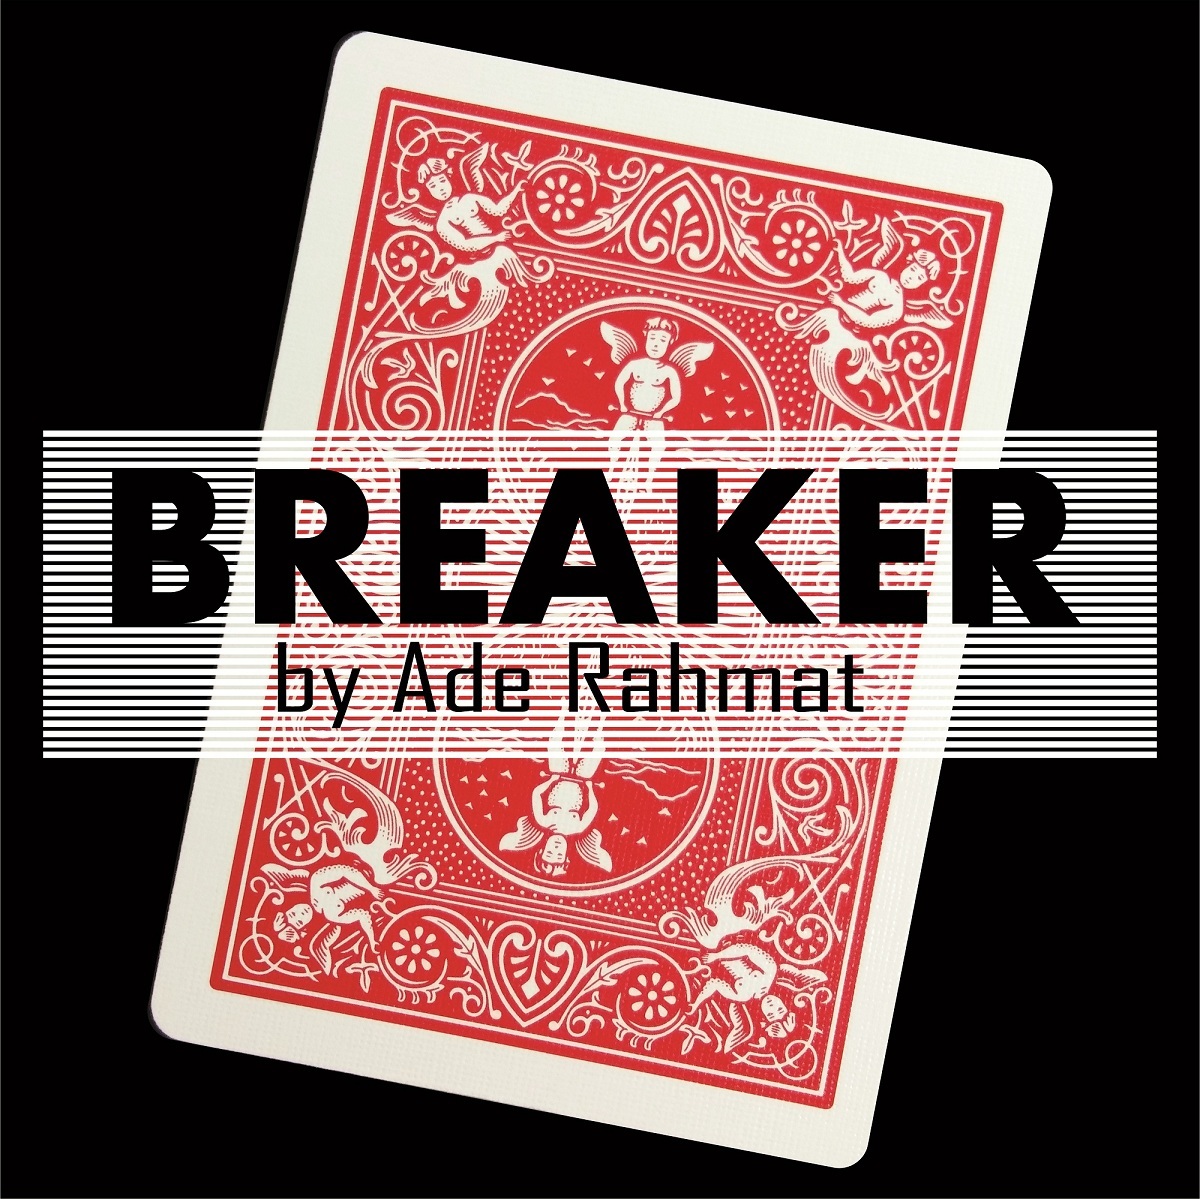 Breaker by Ade Rahmat (Mp4 Video Download)